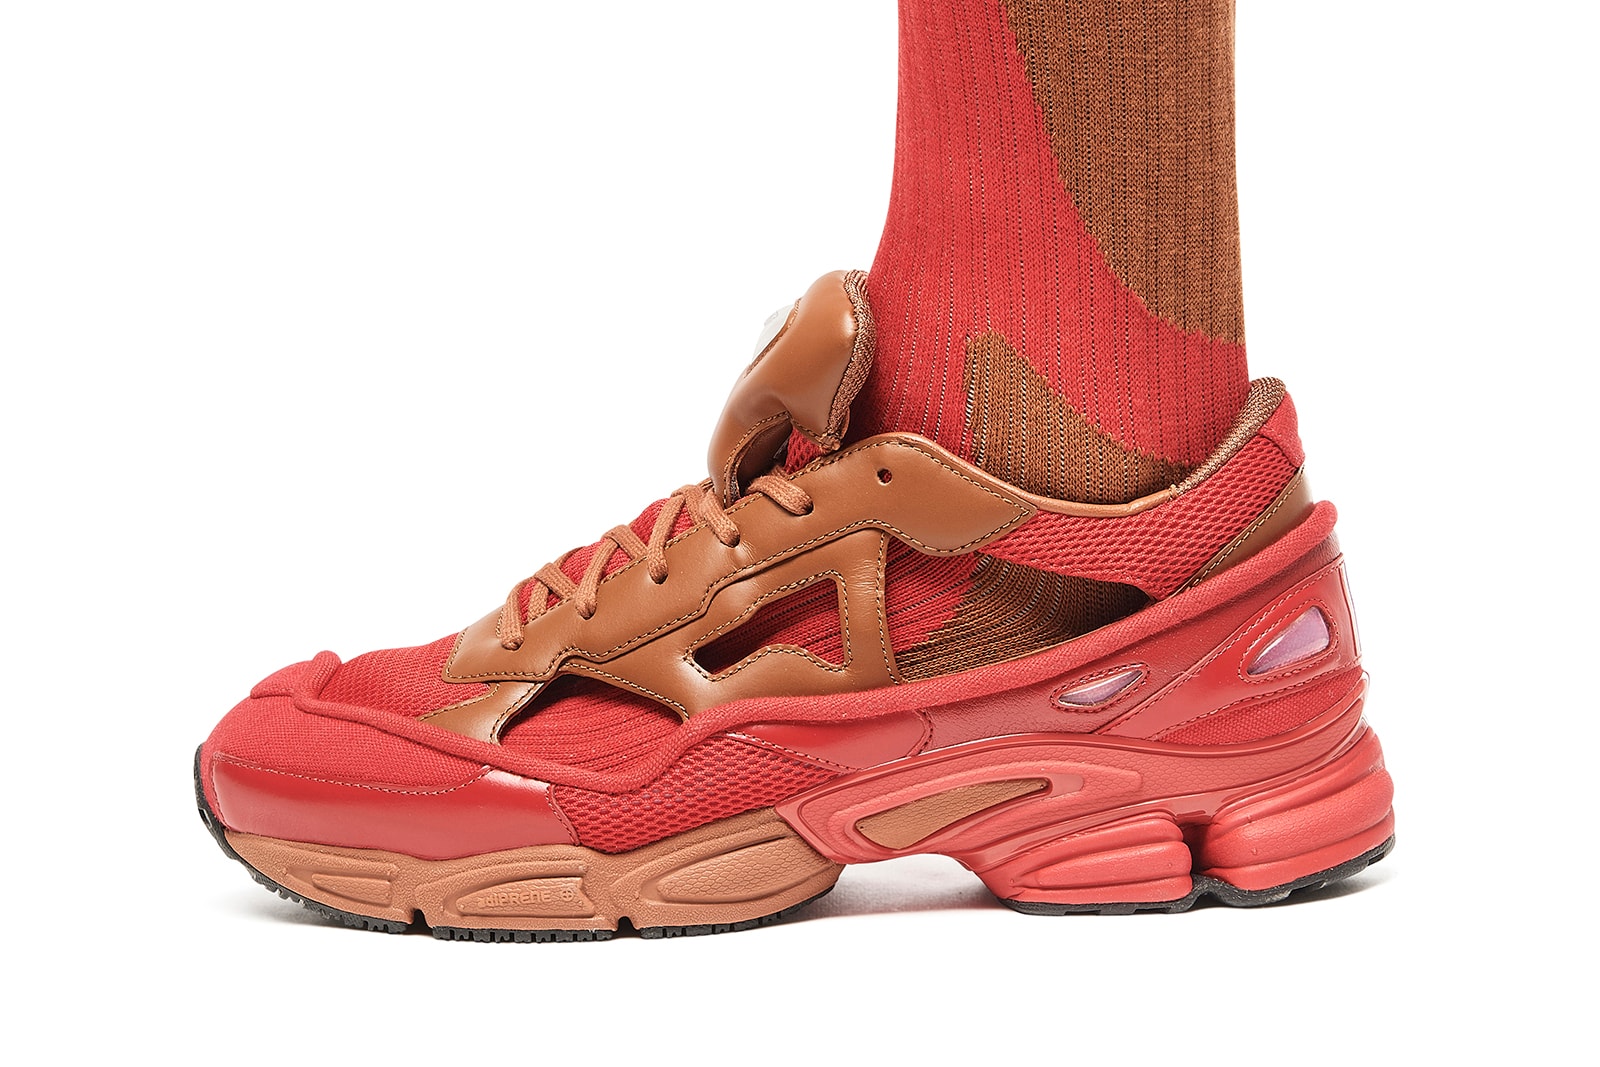 adidas Originals Raf Simons Replicant Ozweego Raffle HBX Colorways Chunky Sneakers Footwear Trainers